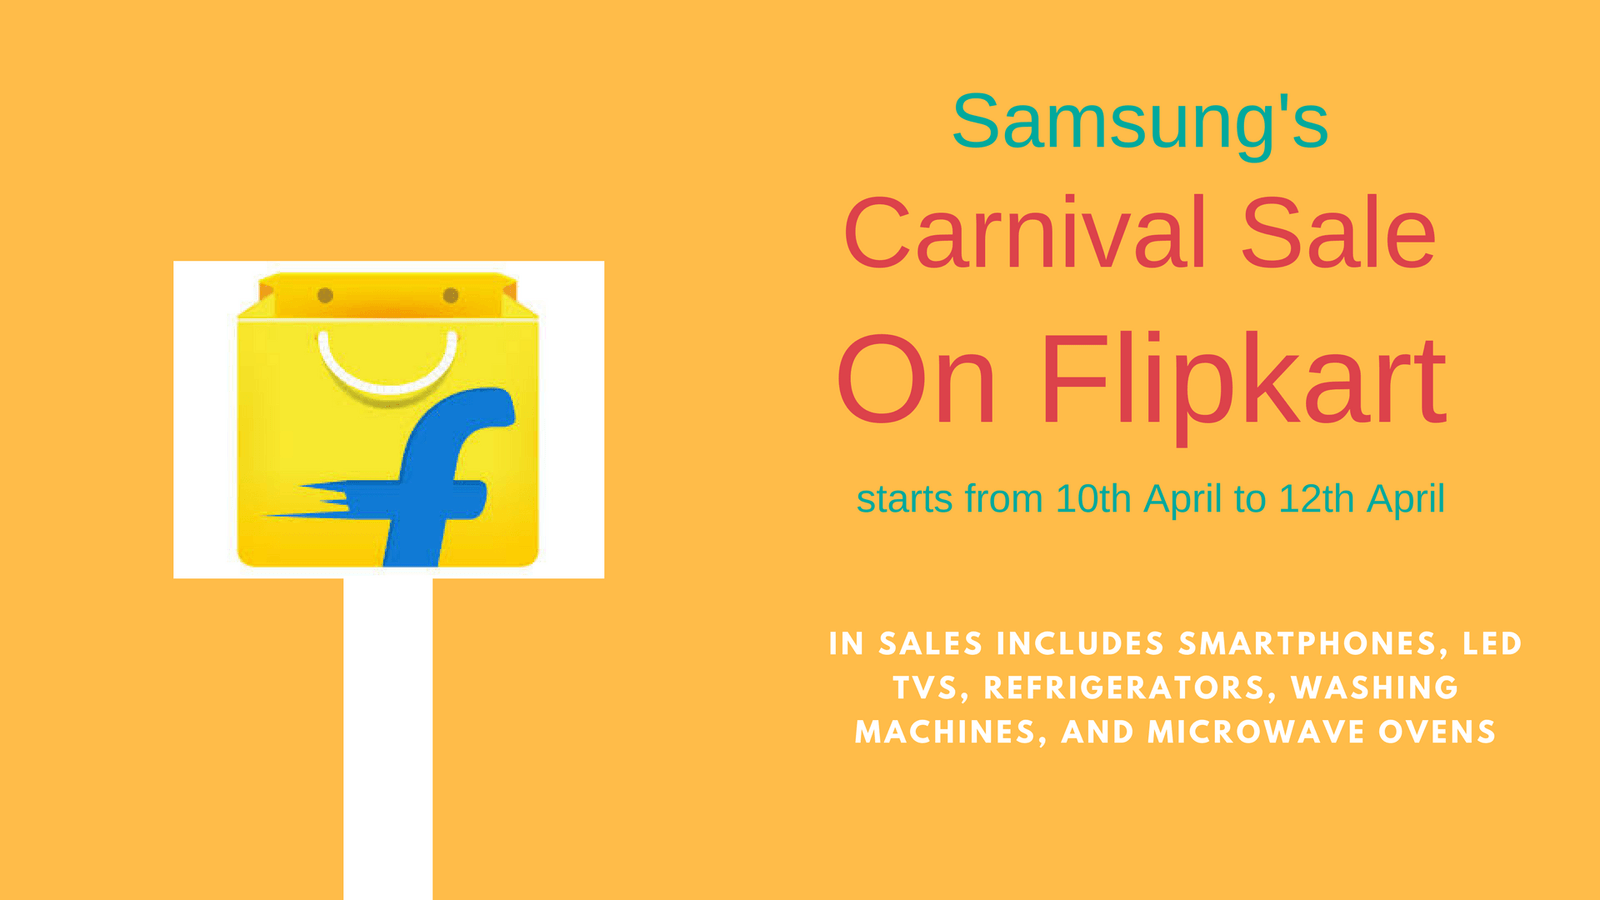 Flipkart Samsung Carnival Sale